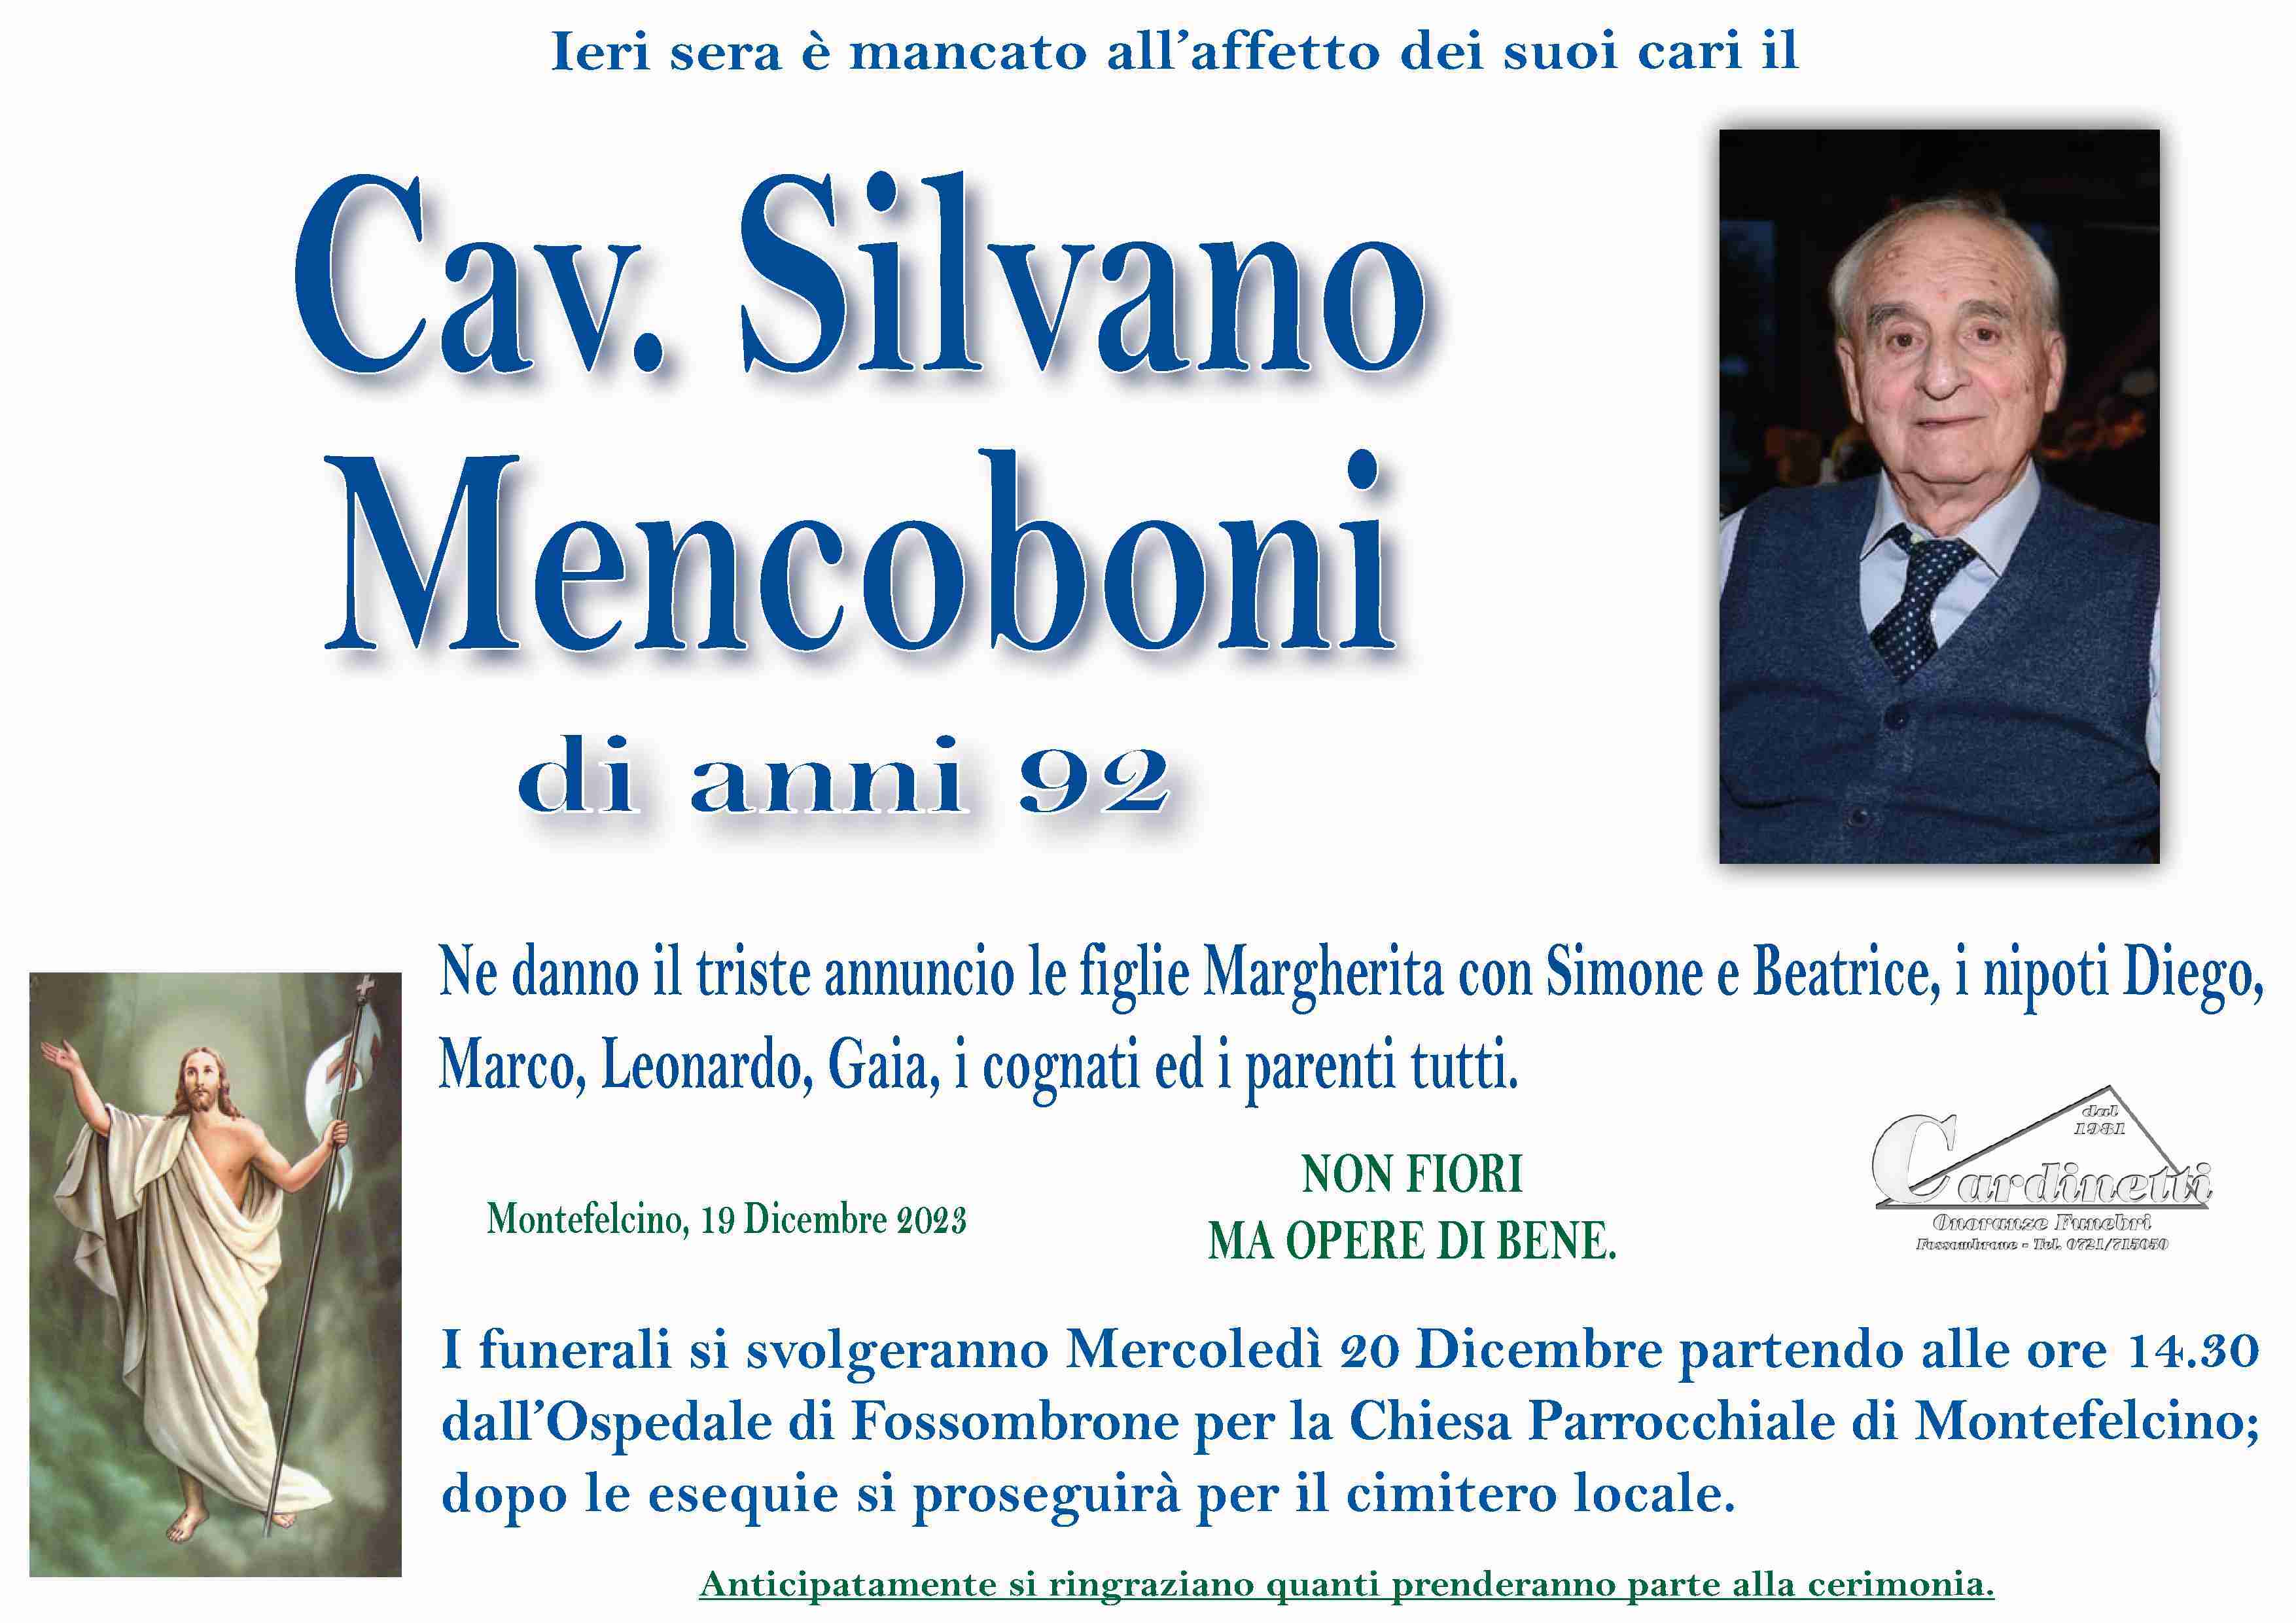 Silvano Mencoboni